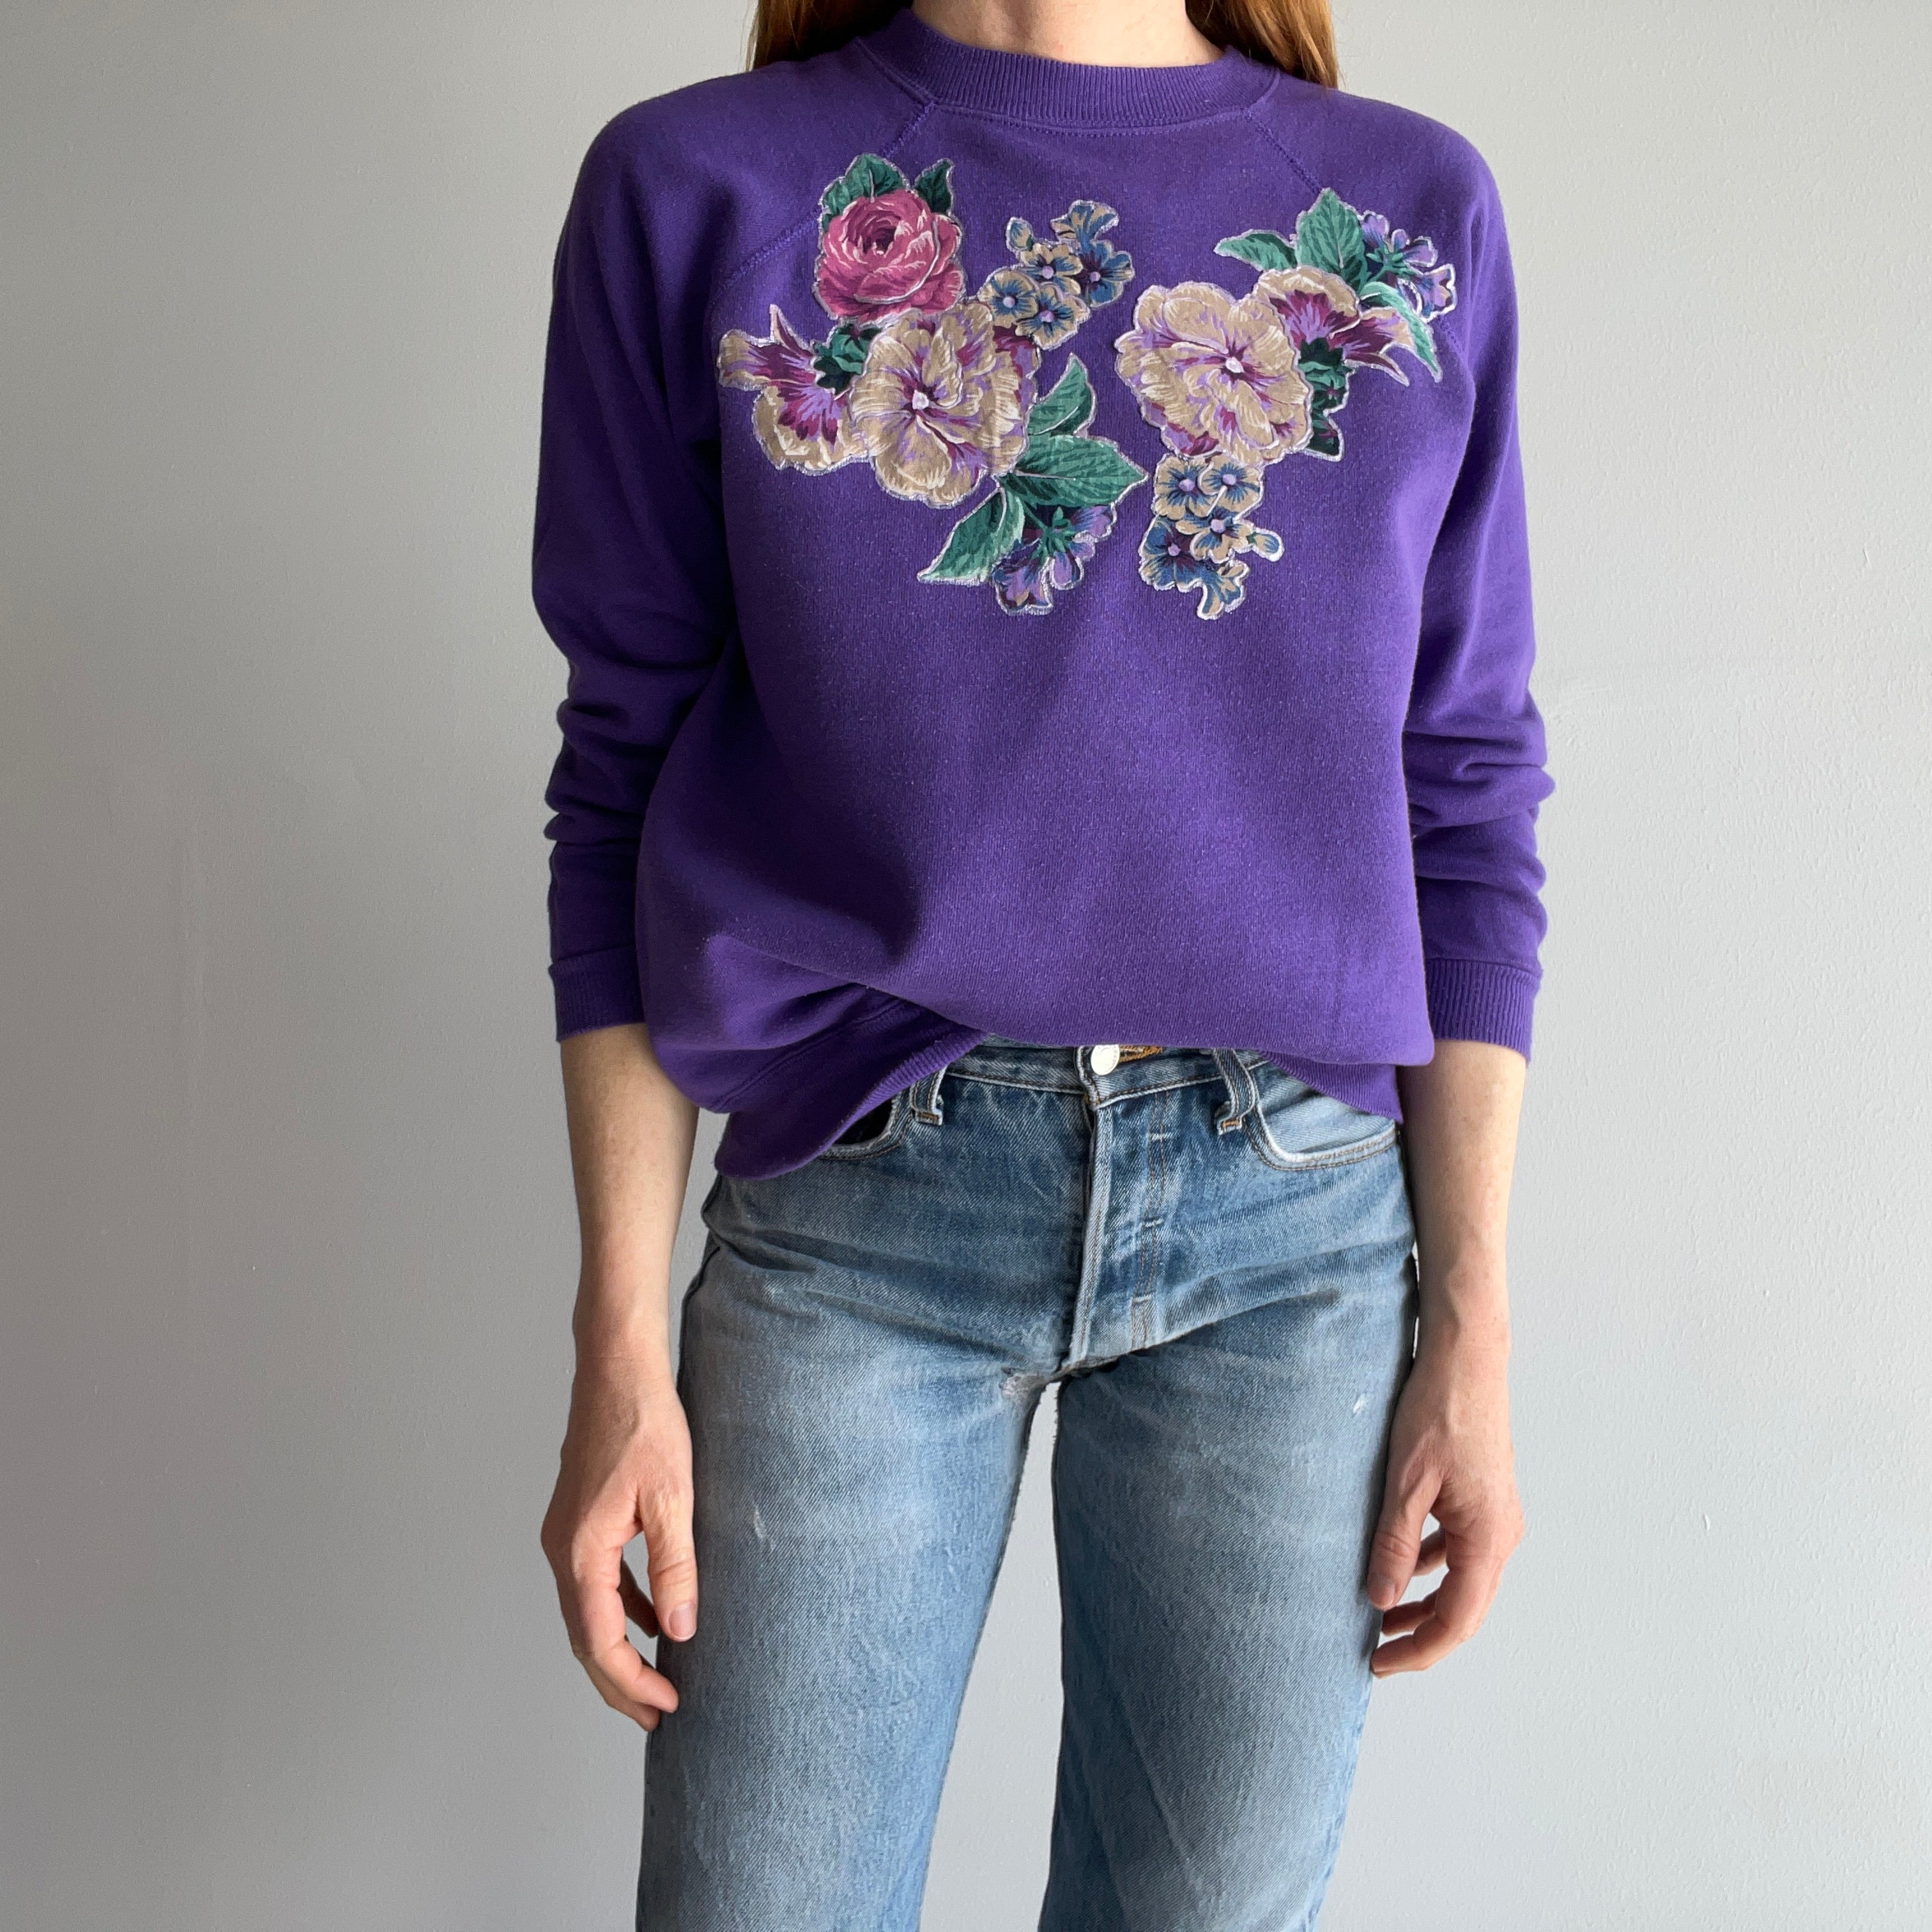 1980s DIY Flowers with Puff Paint Sweatshirt